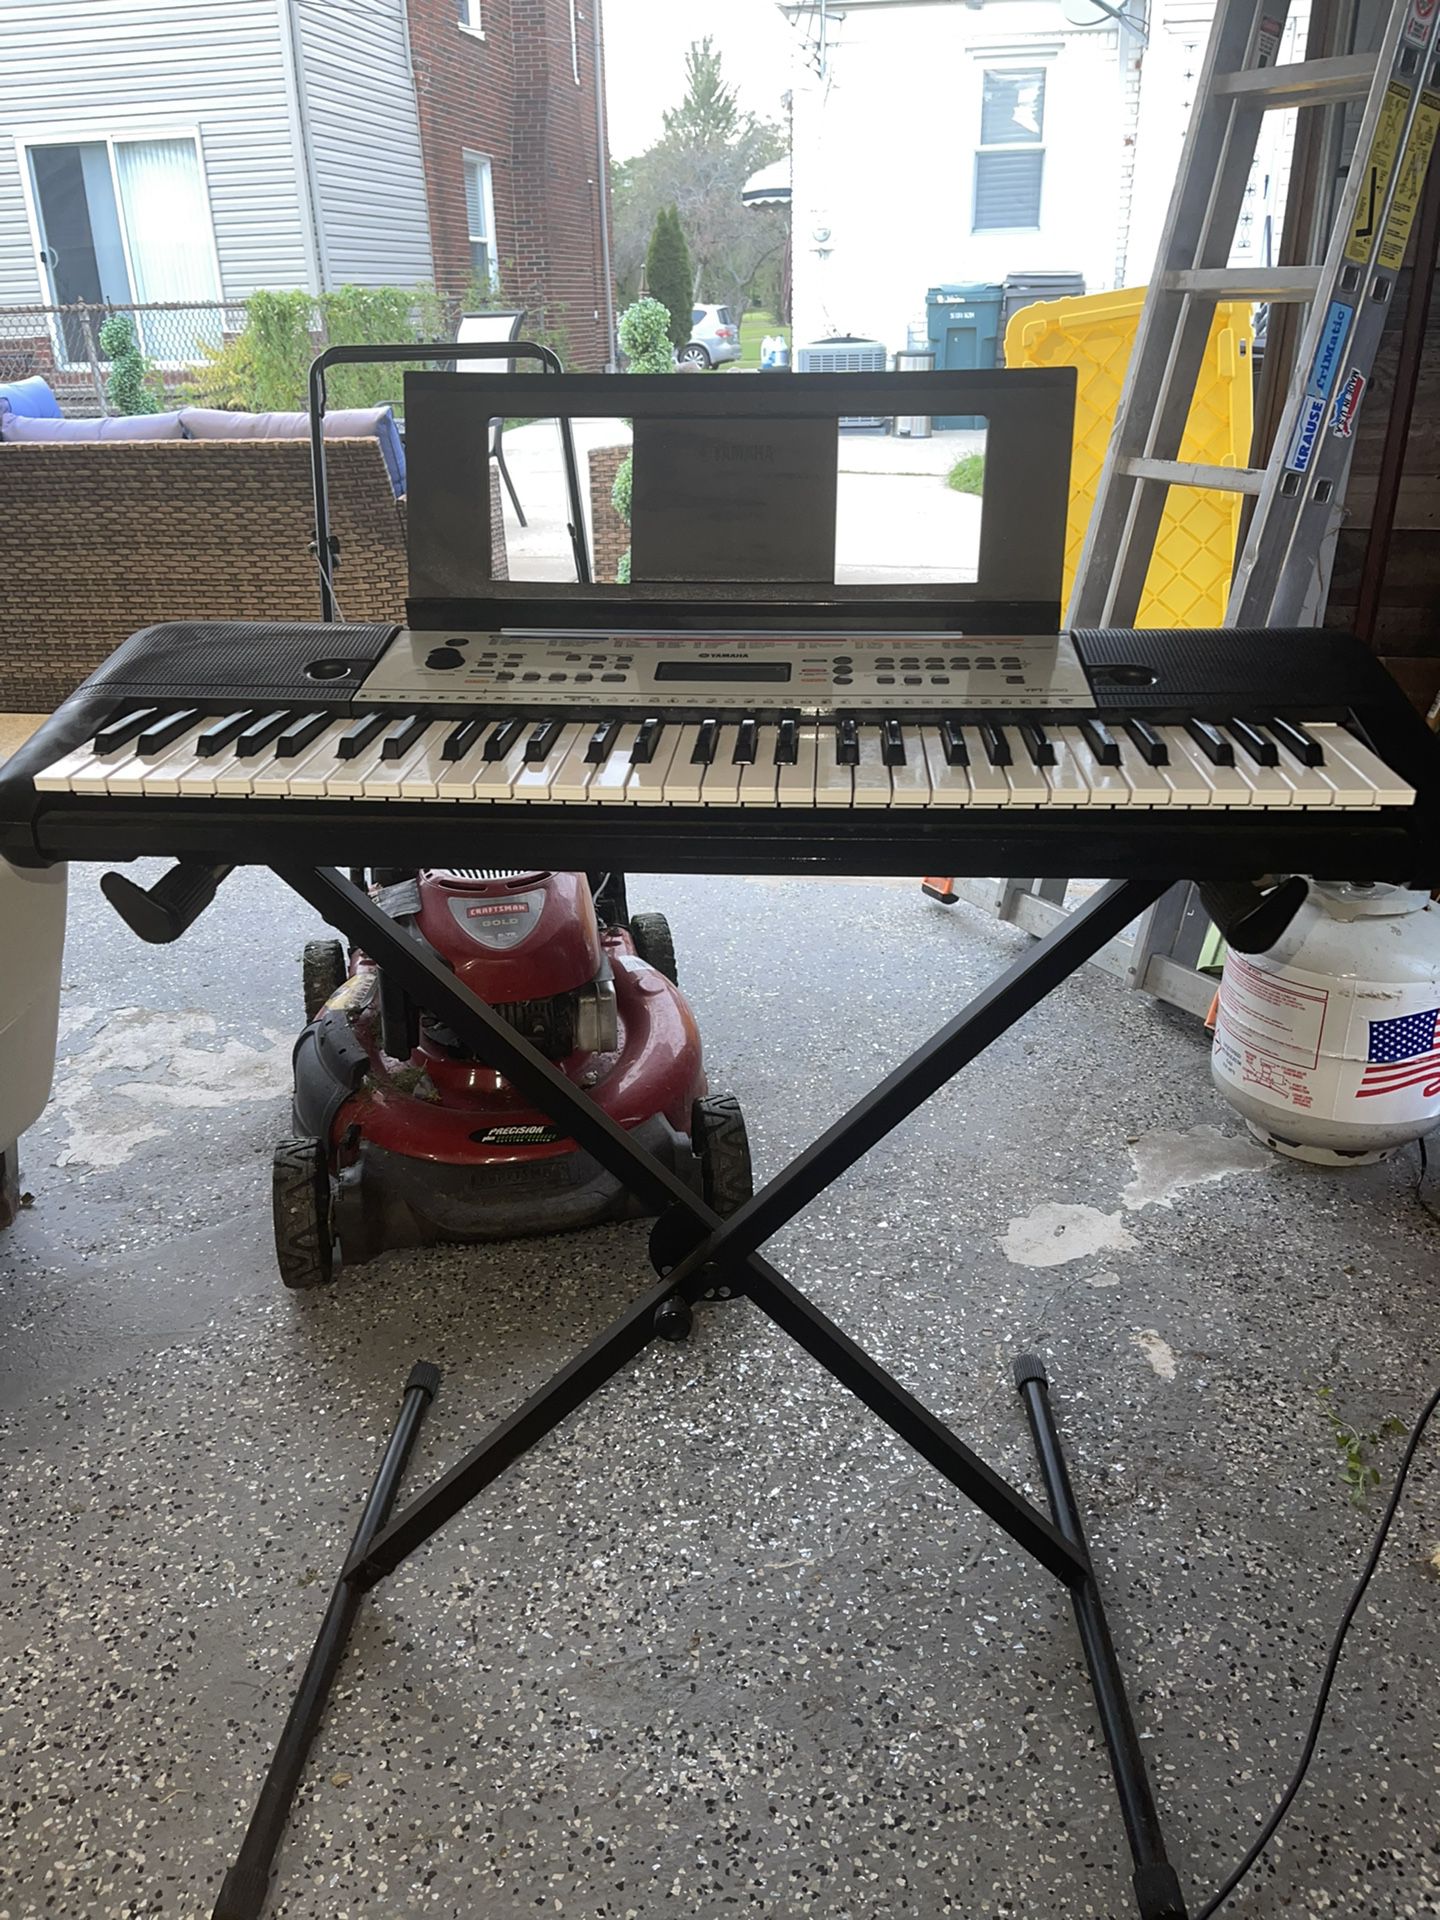 Yamaha Keyboard And Stand